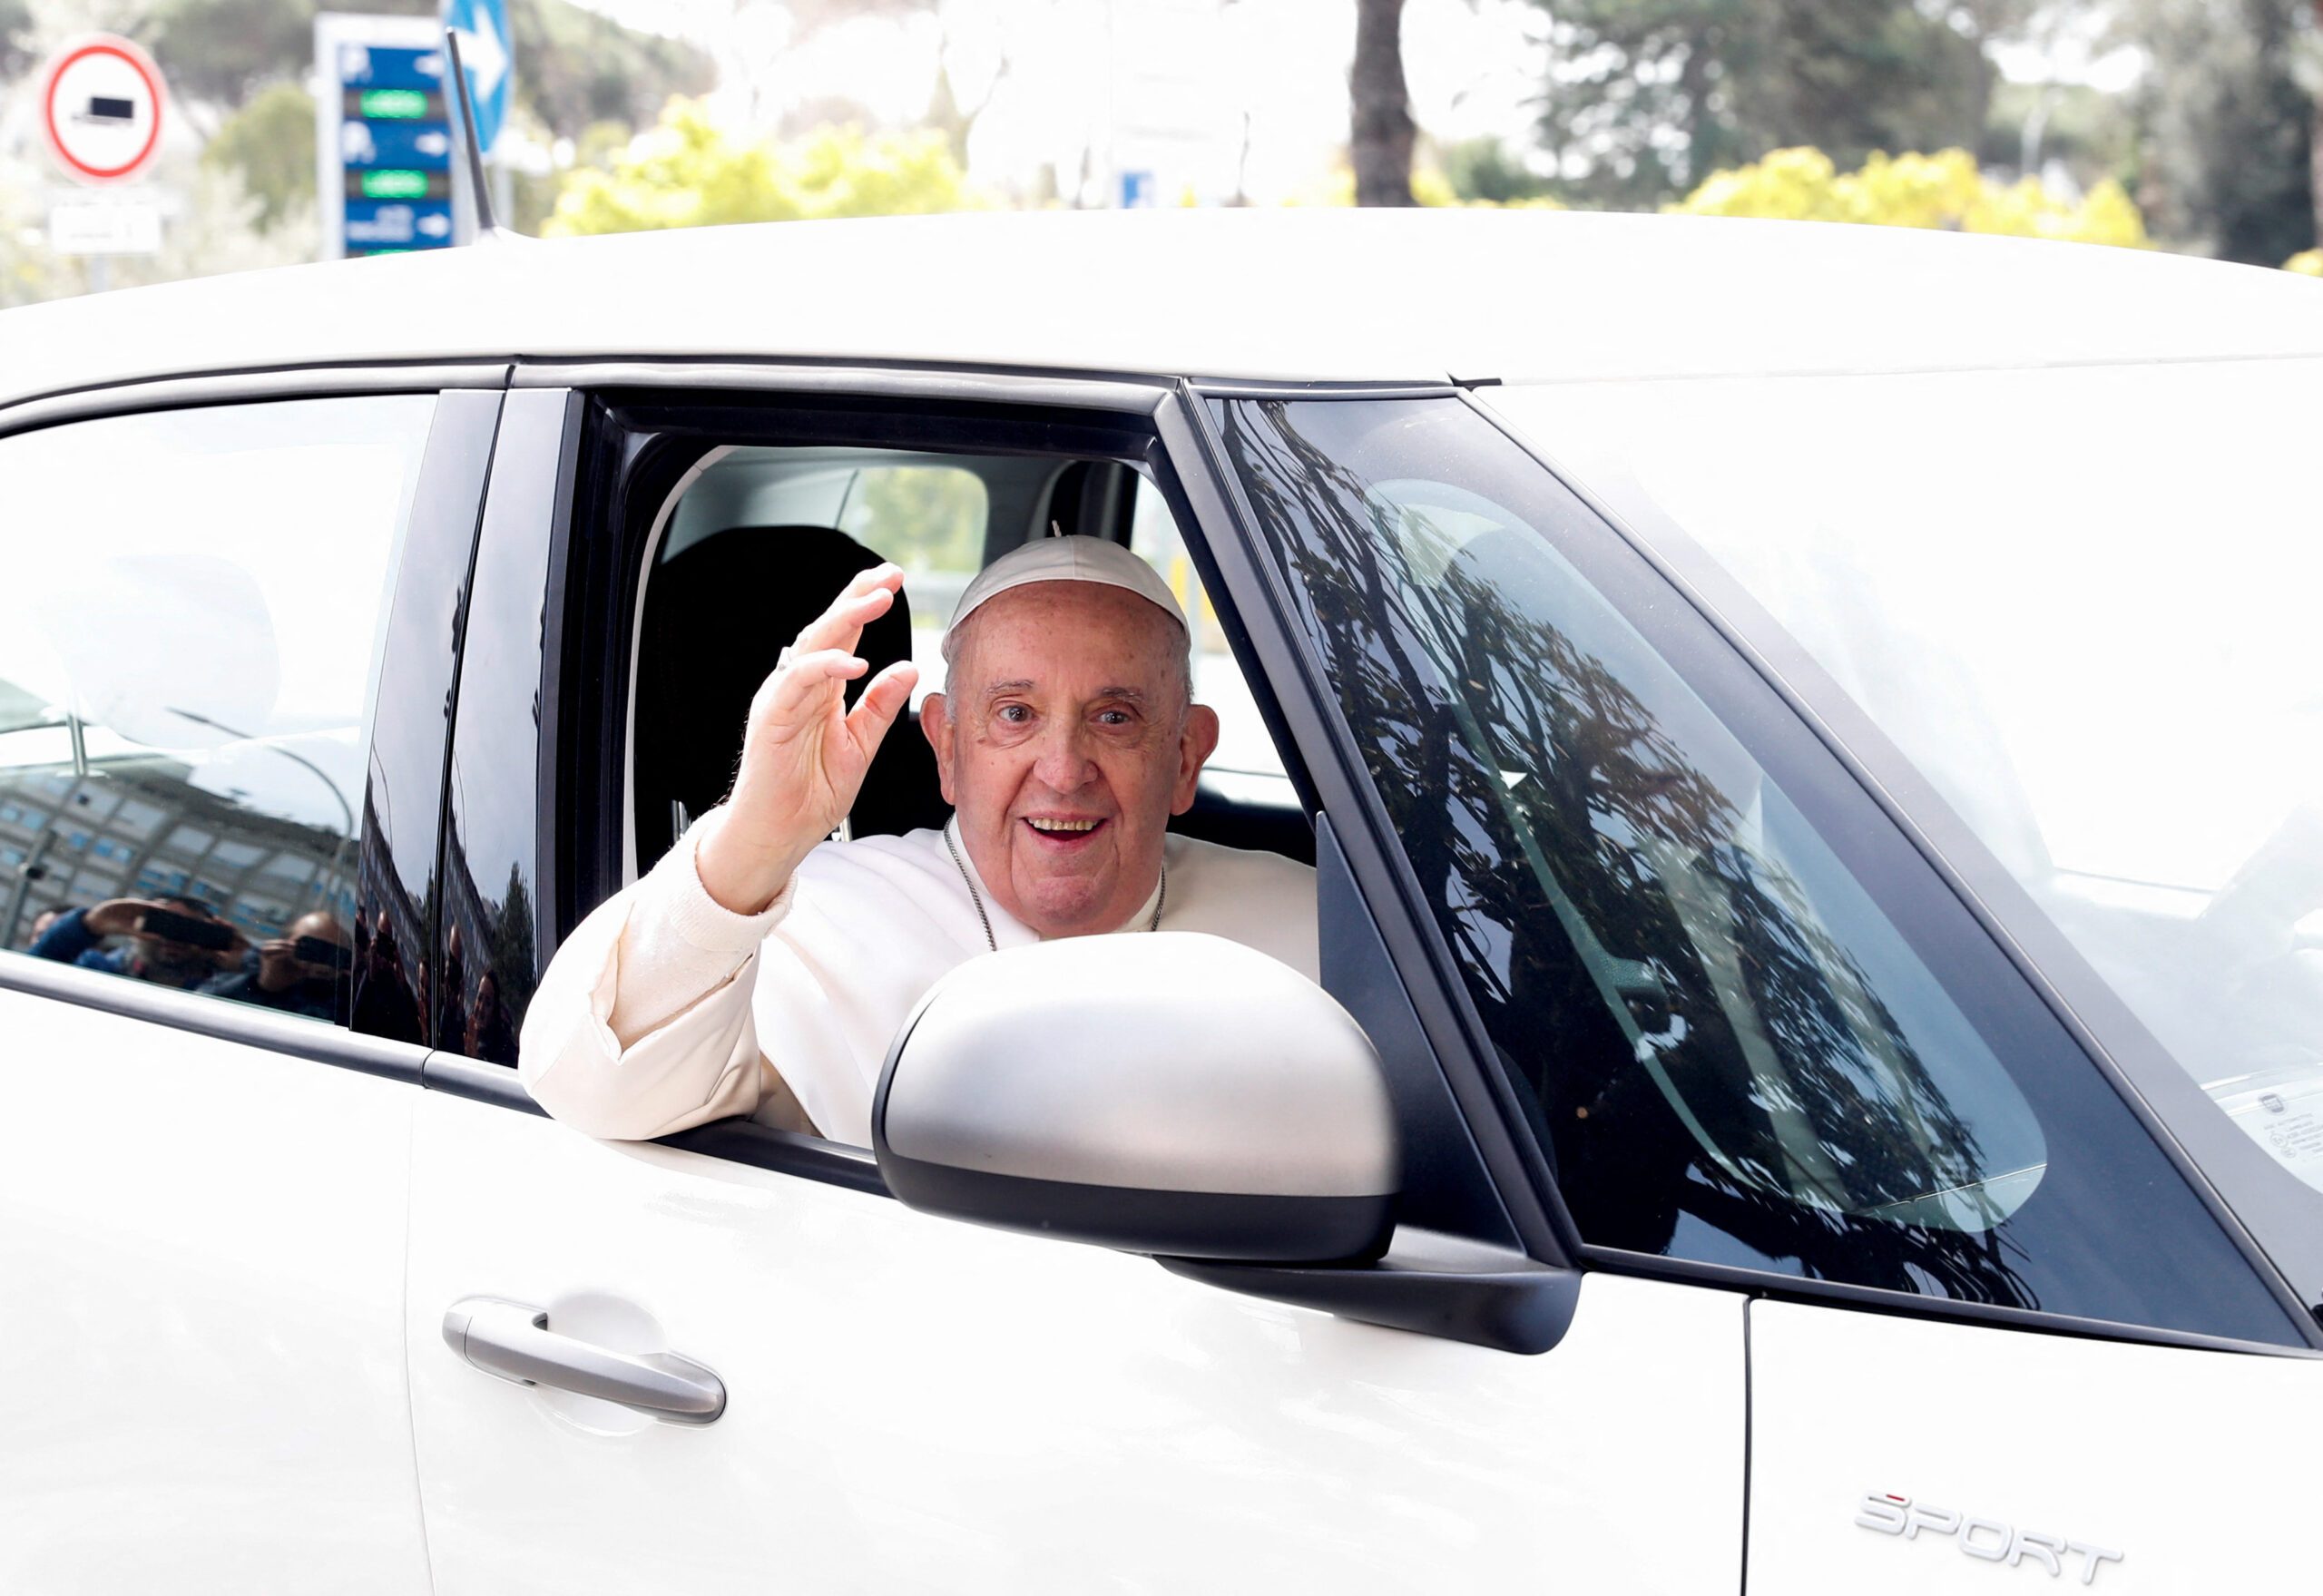 Pope Francis leaves hospital, saying ‘I’m still alive’